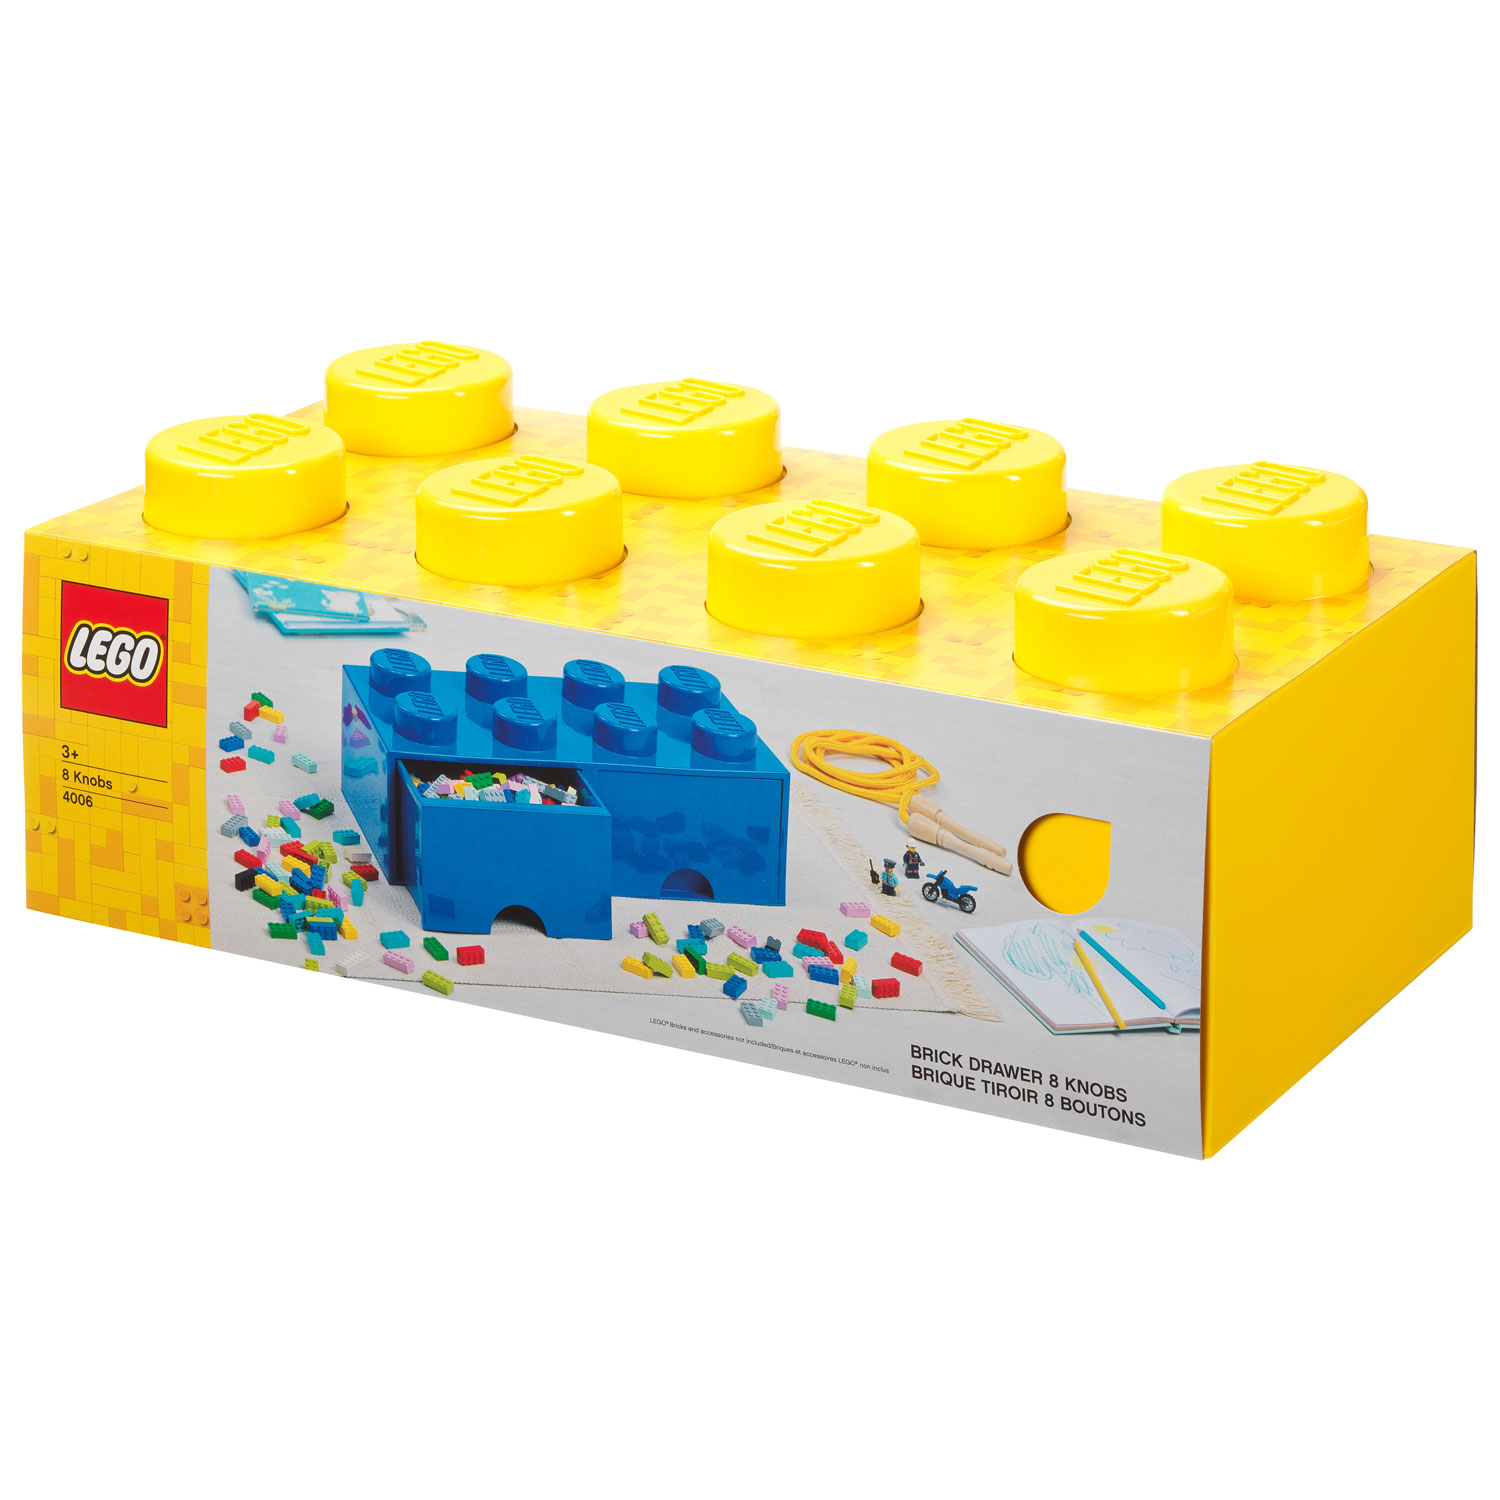 LEGO 8 Knobs Brick Storage Box with 2 Drawers - Bright Yellow (40061732)